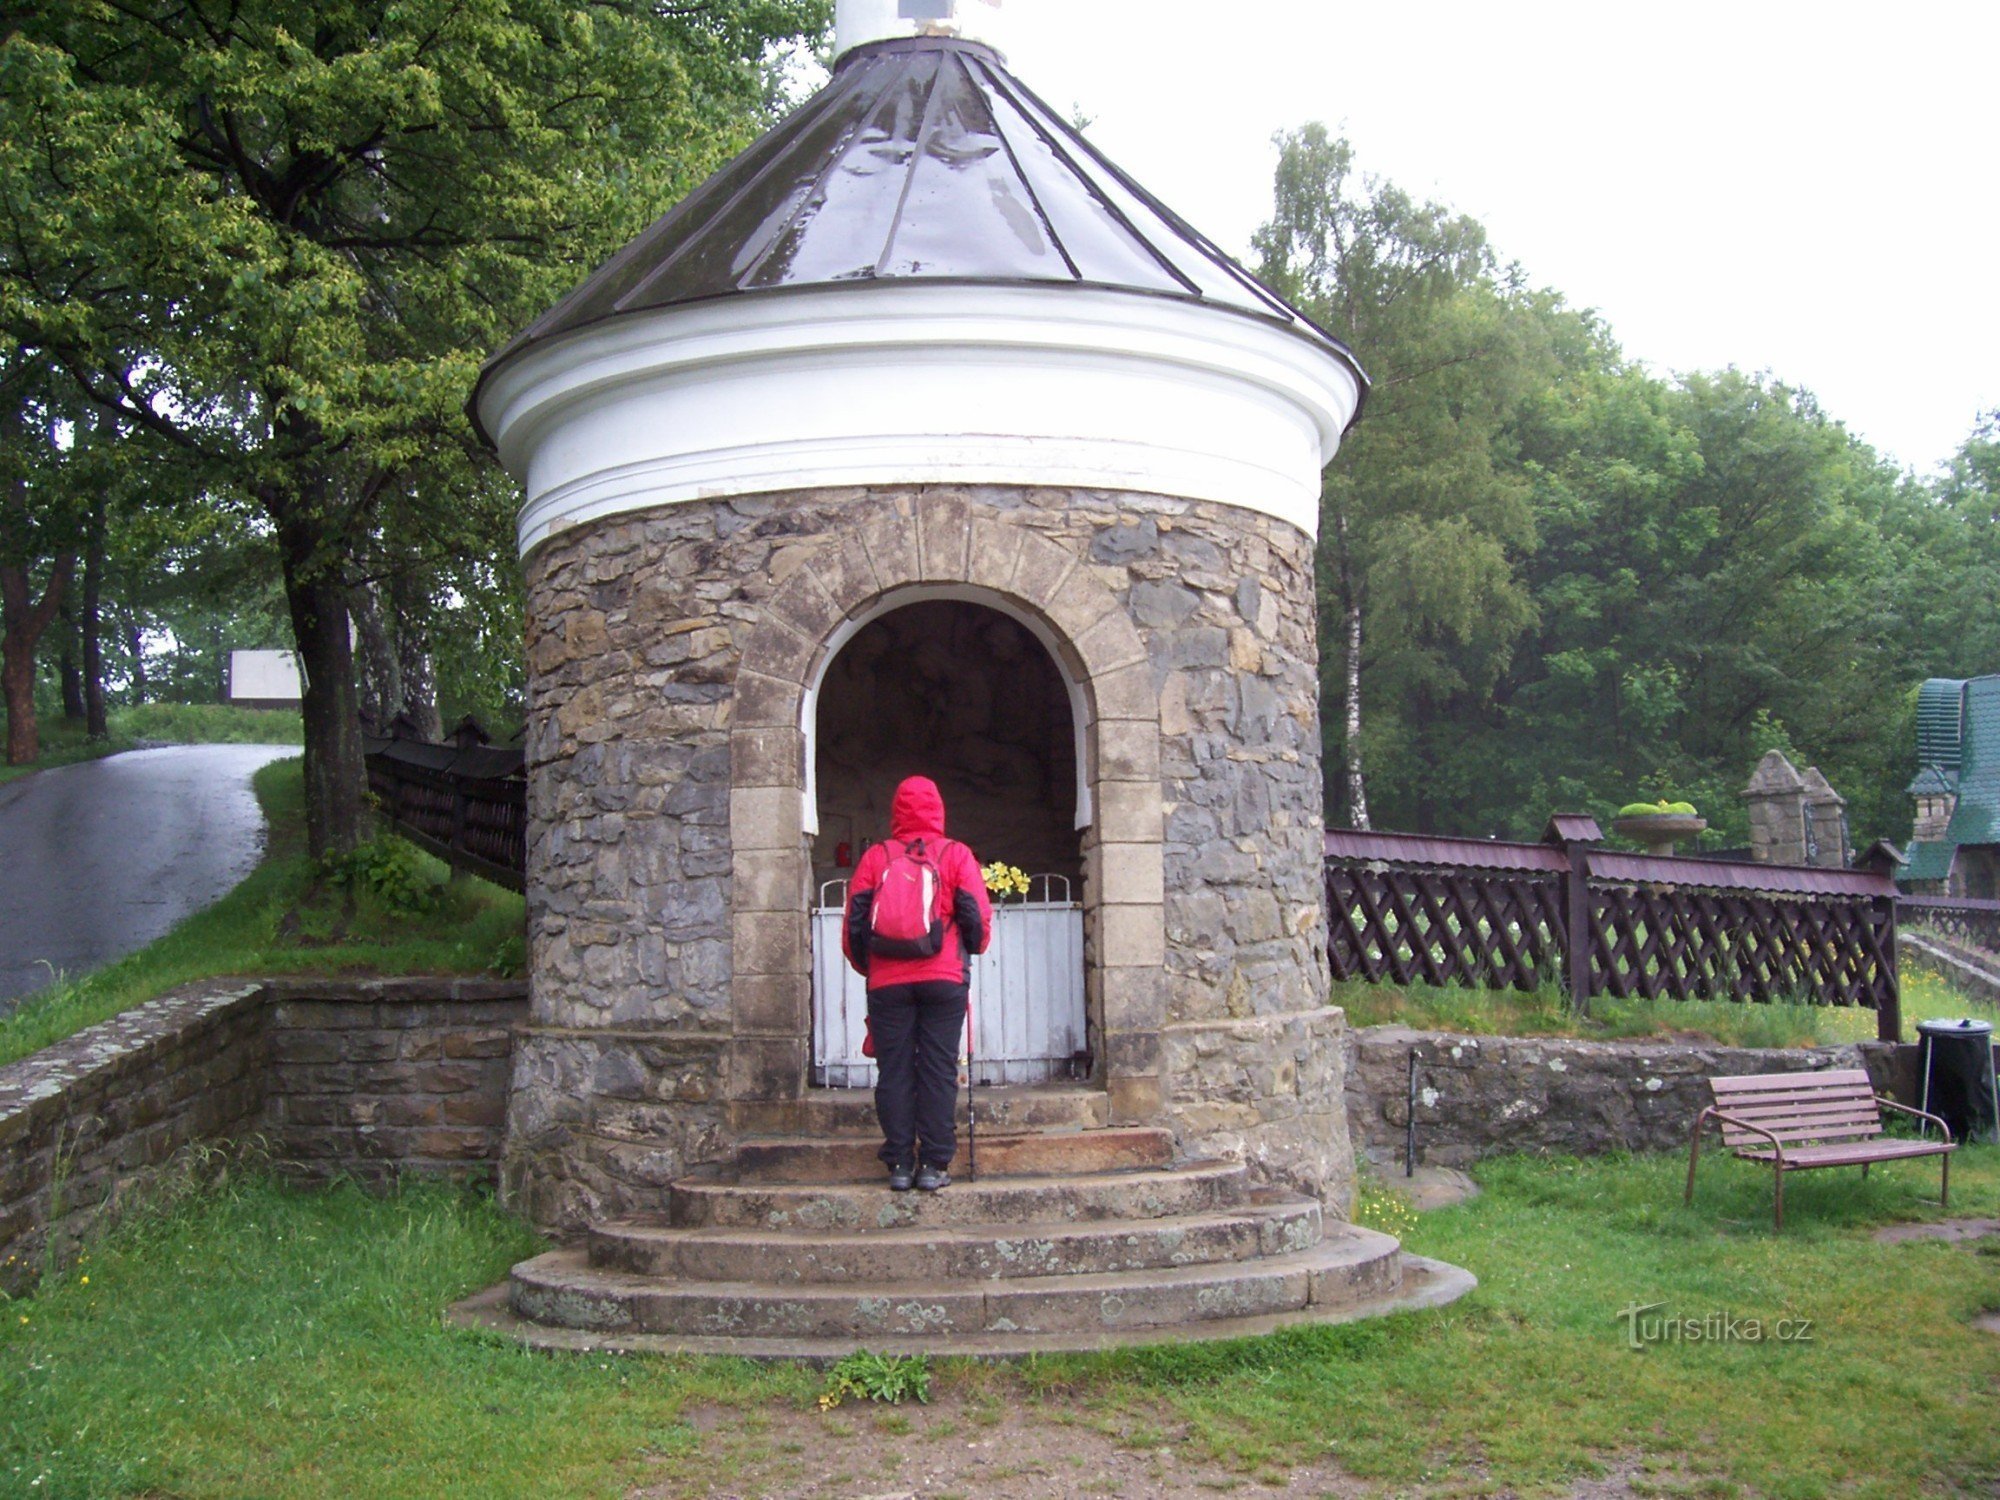 Hostýn-kapel op de bergbegraafplaats